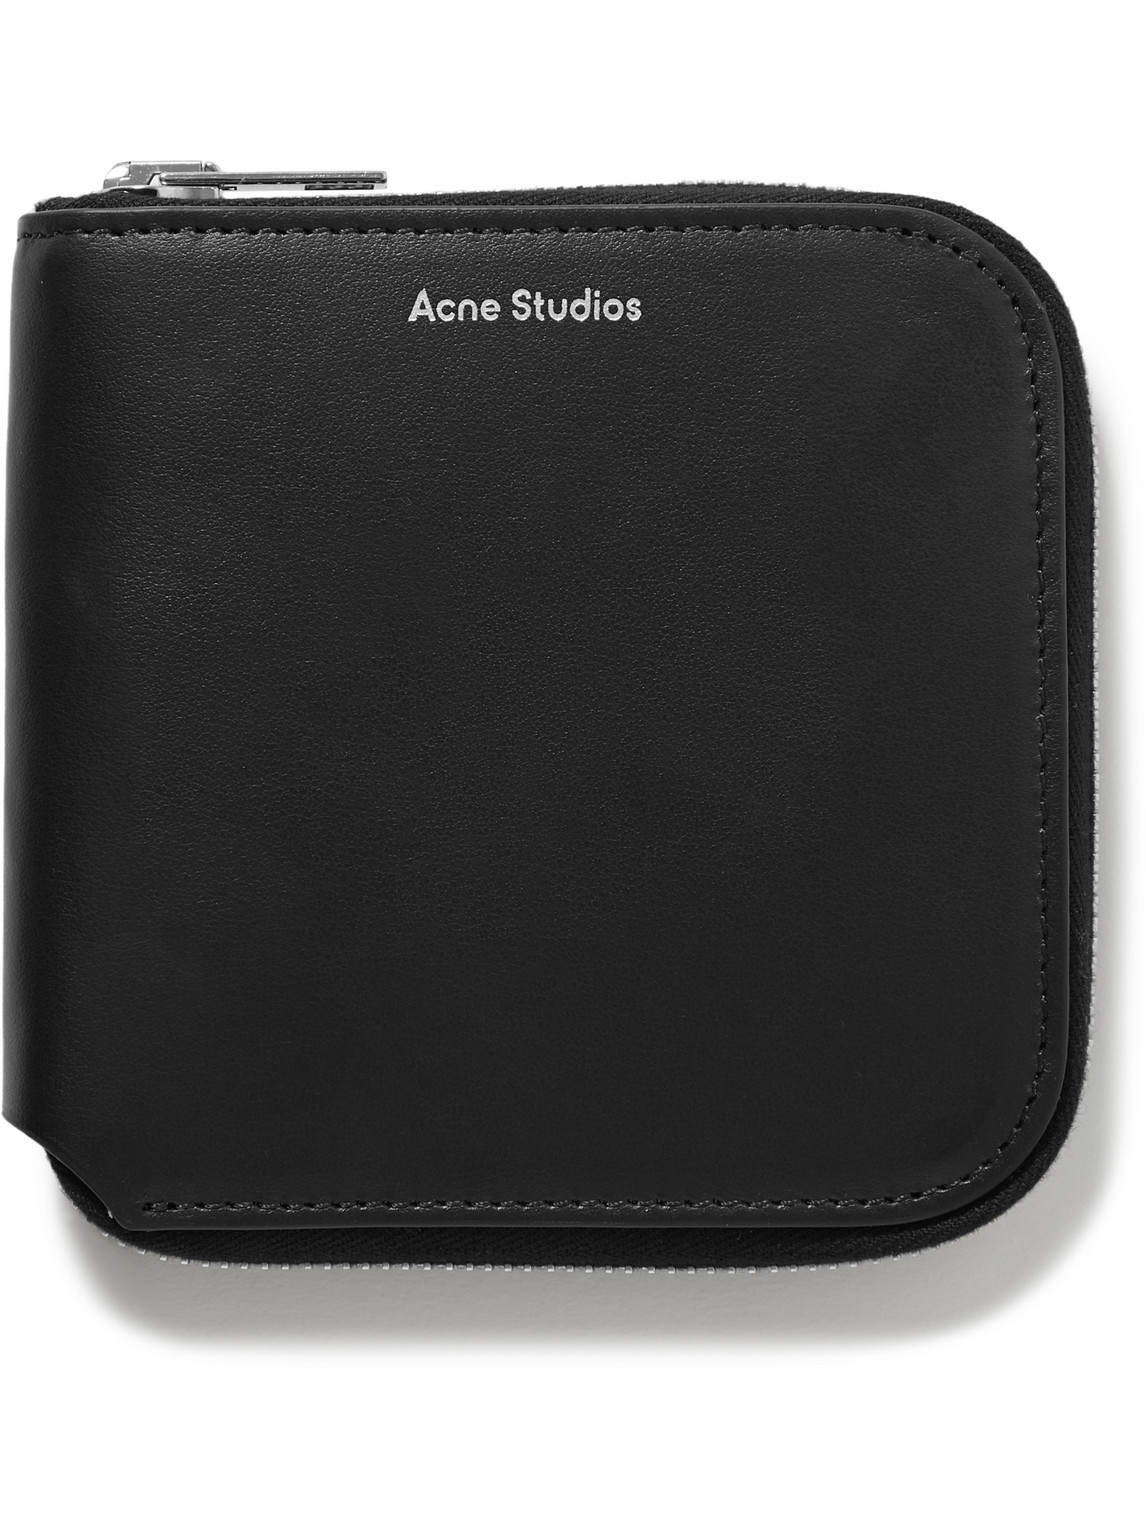 Acne Studios - Logo-Print Leather Zip-Around Wallet - Men - Black von Acne Studios